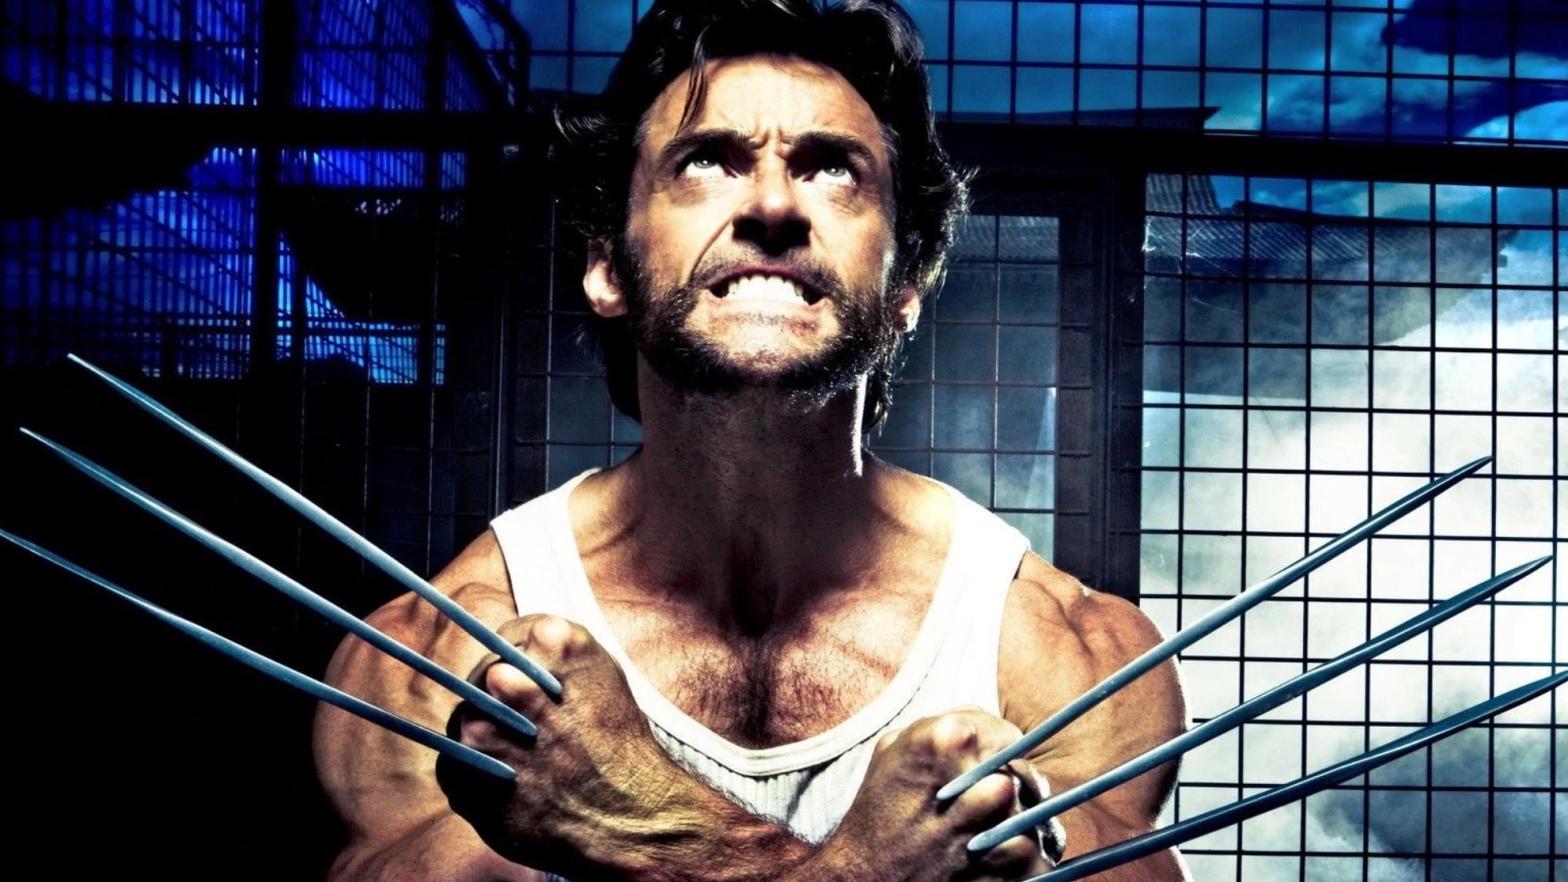 Hugh Jackman's Wolverine is one of the enduring legacies of the original X-Men films. (Image: Fox)